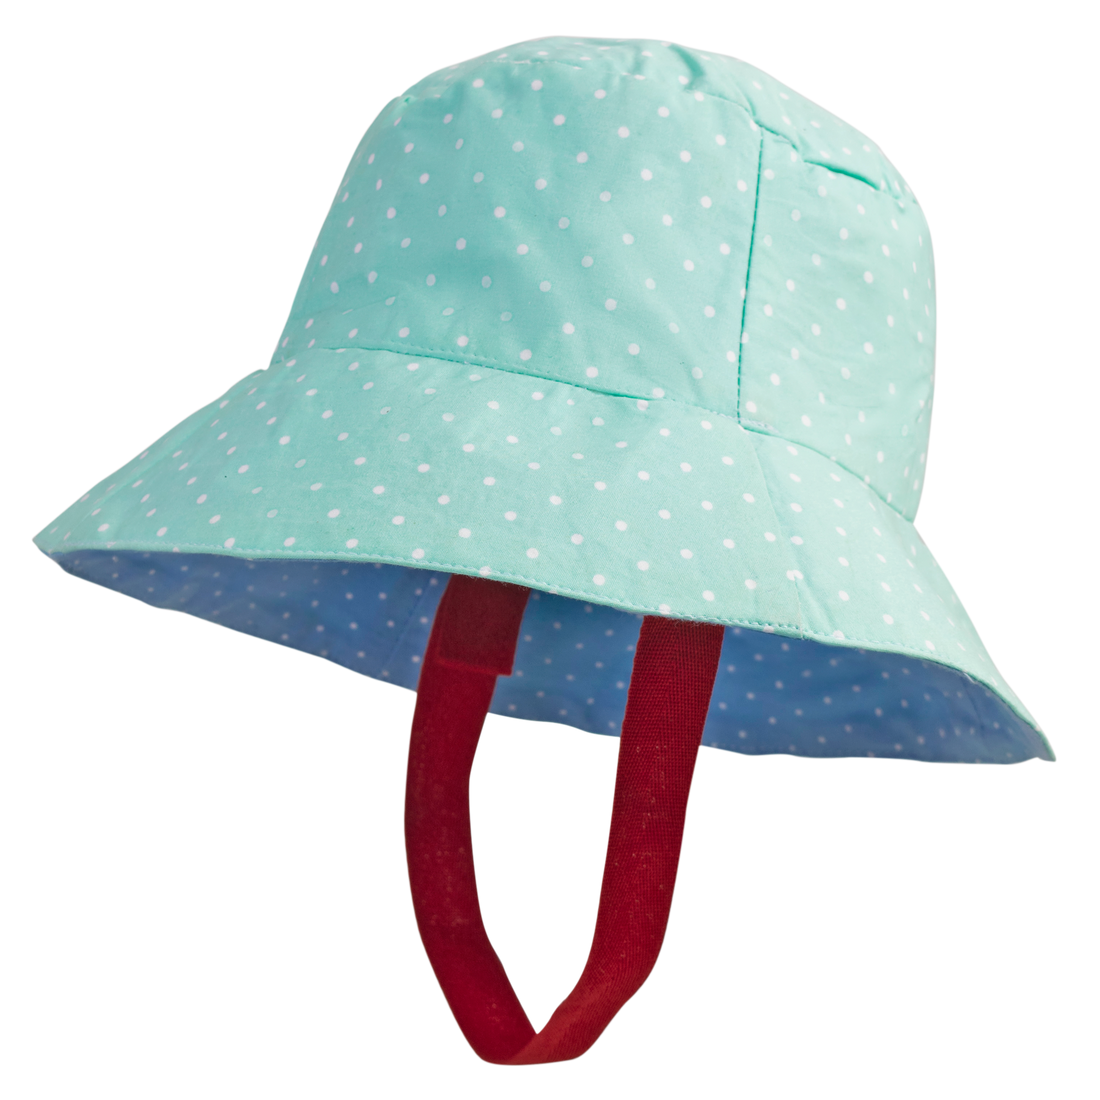 Sun hat / Beach hat